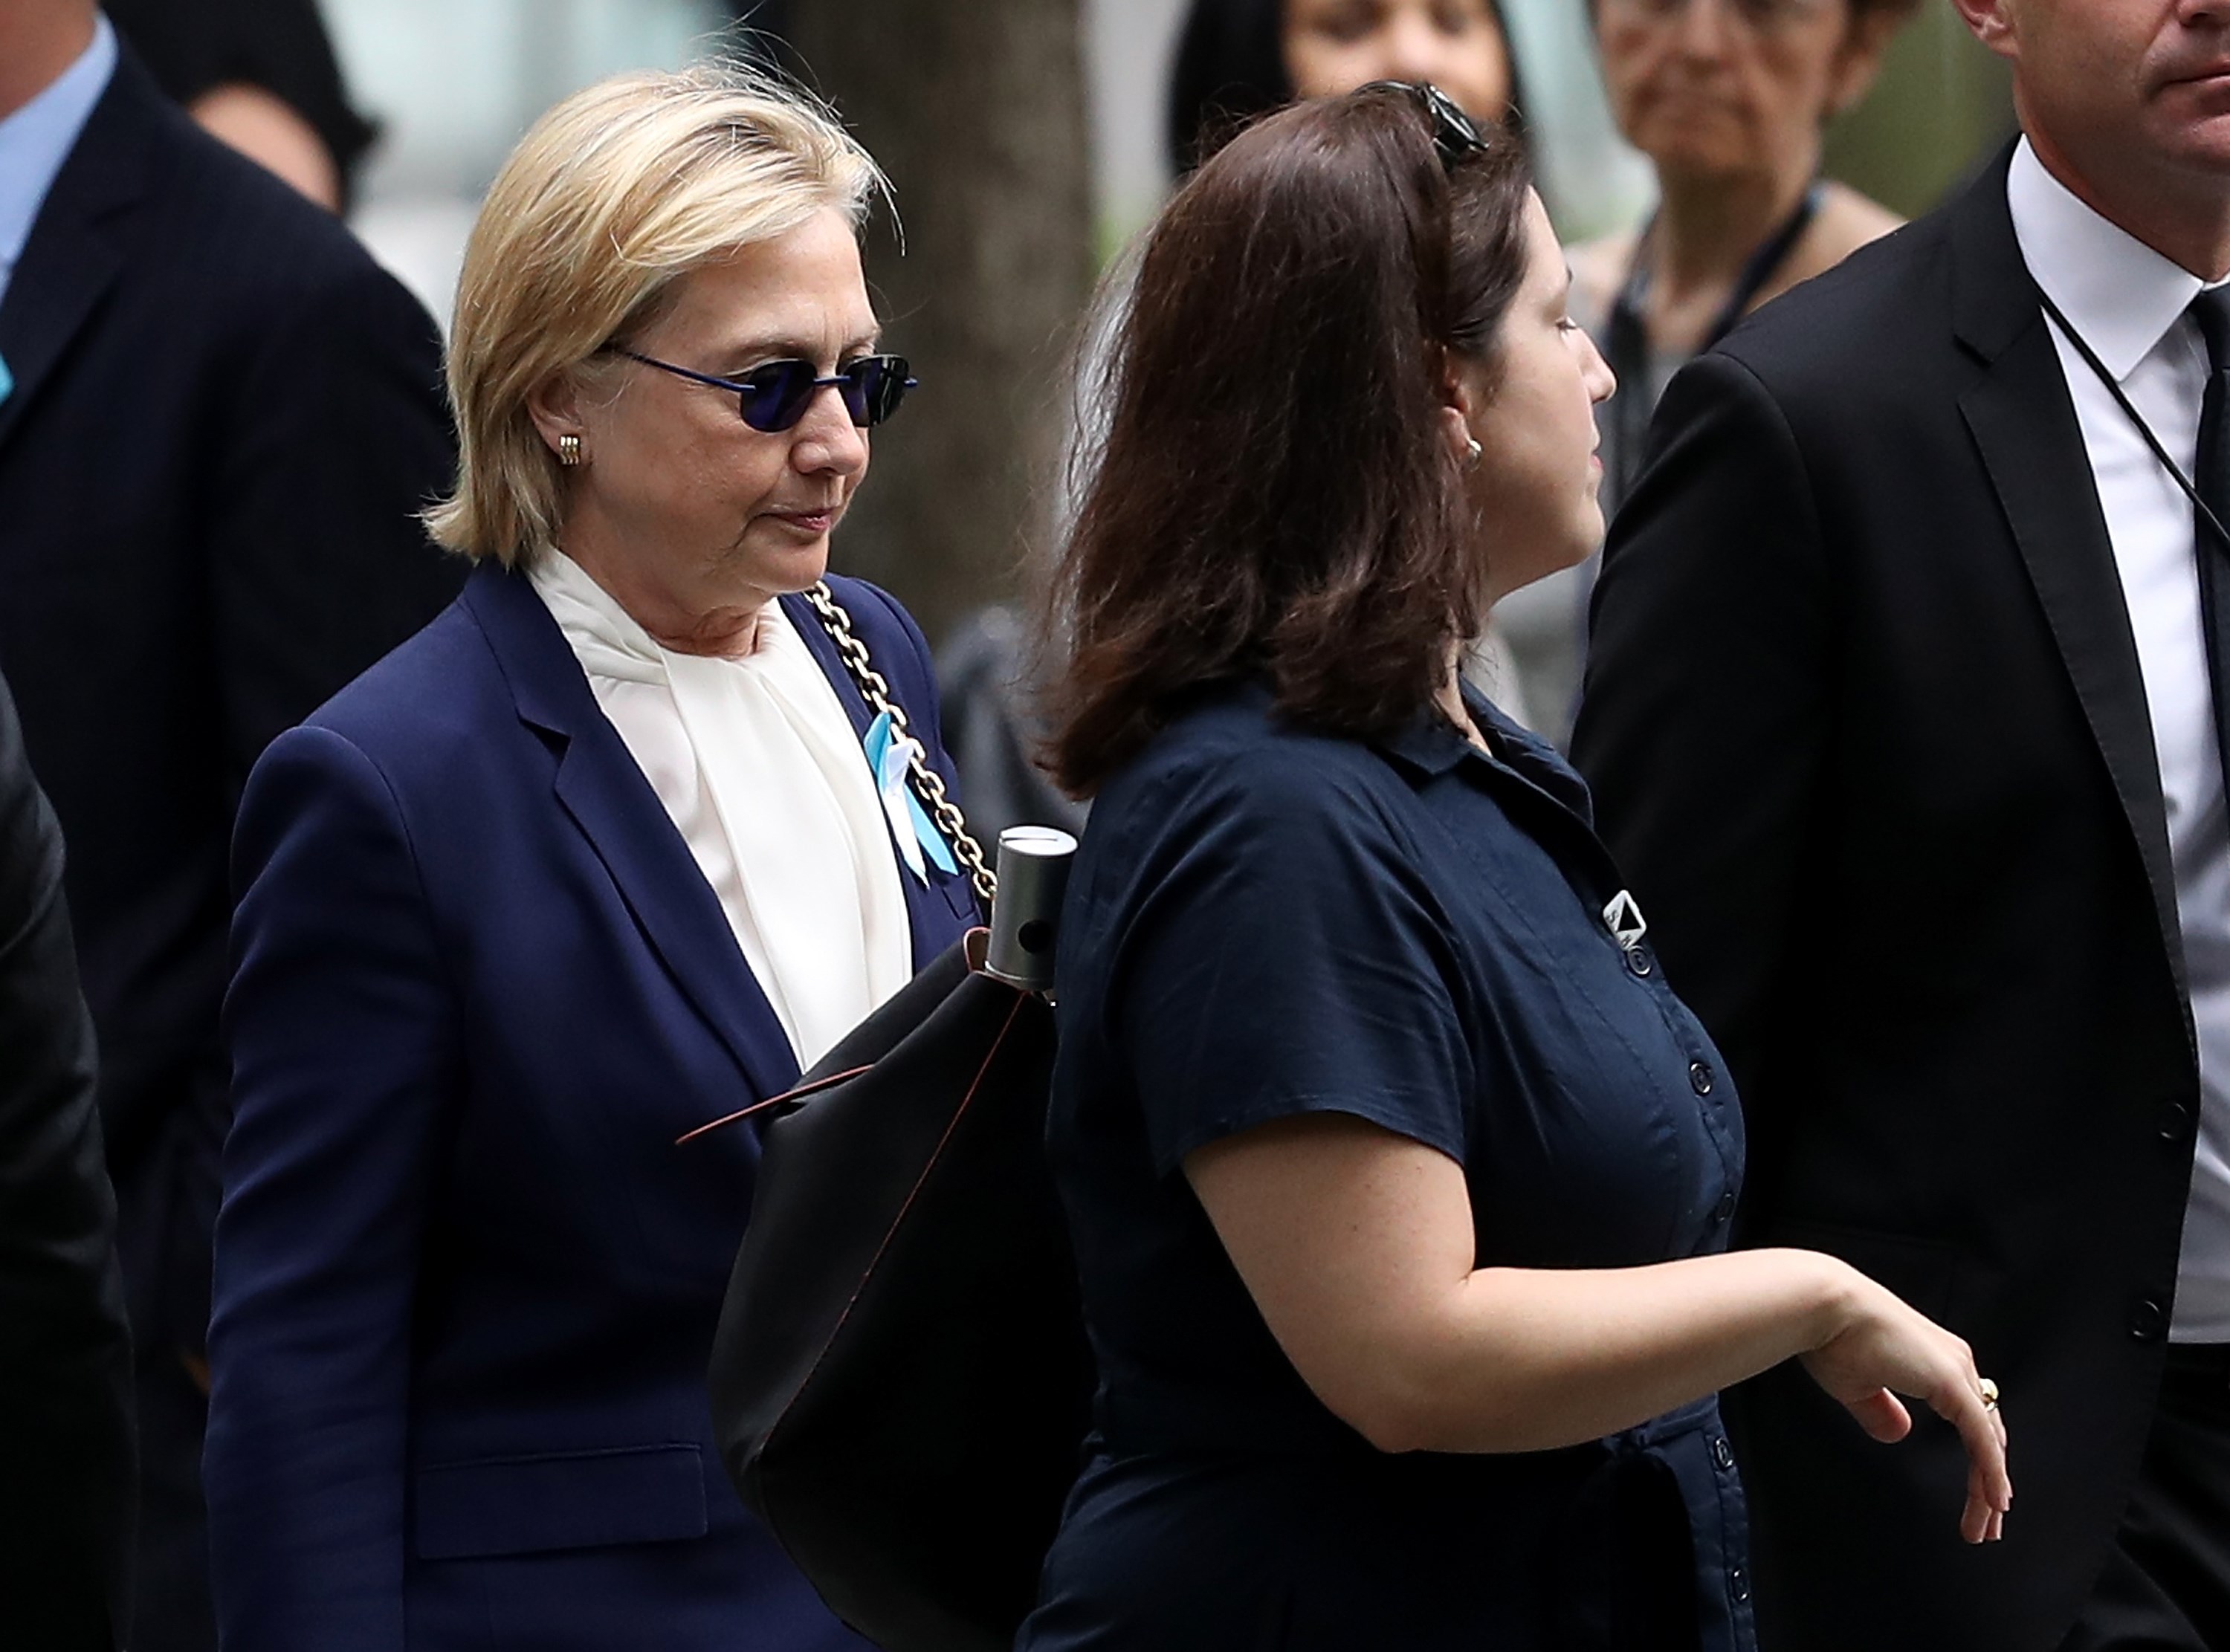 Clinton's bout of pneumonia raises worries for Democrats